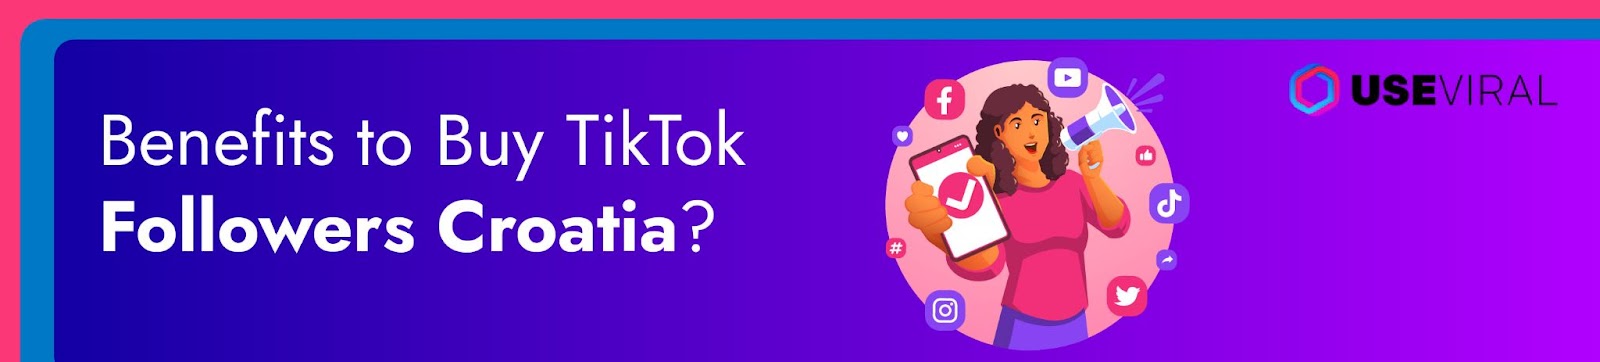 Benefits to Buy TikTok Followers Croatia?